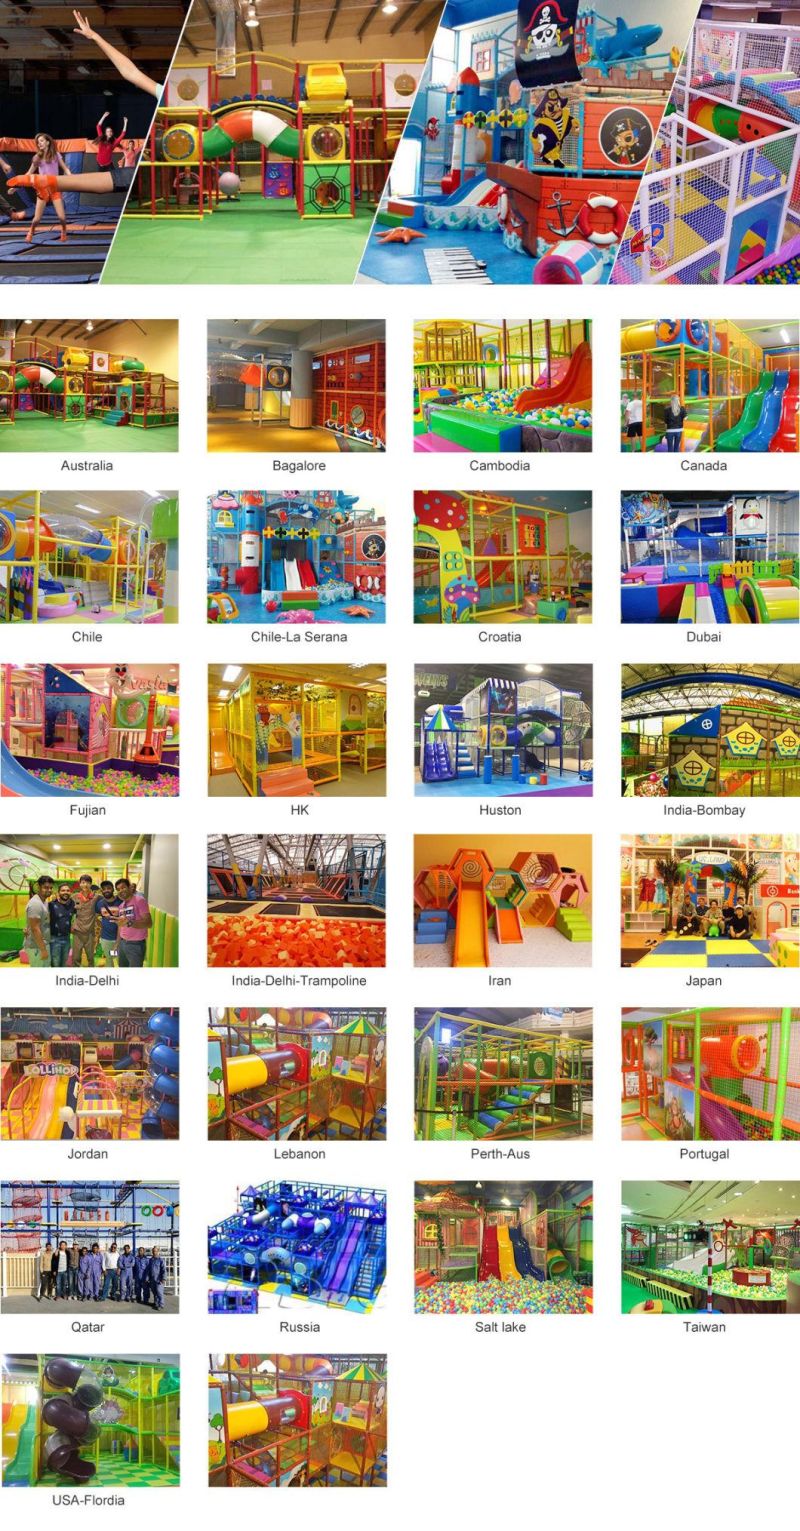 Hot Selling Children&Child&Kids Plastic&Wooden Indoor&Outdoor Naughty Fort Soft Playground